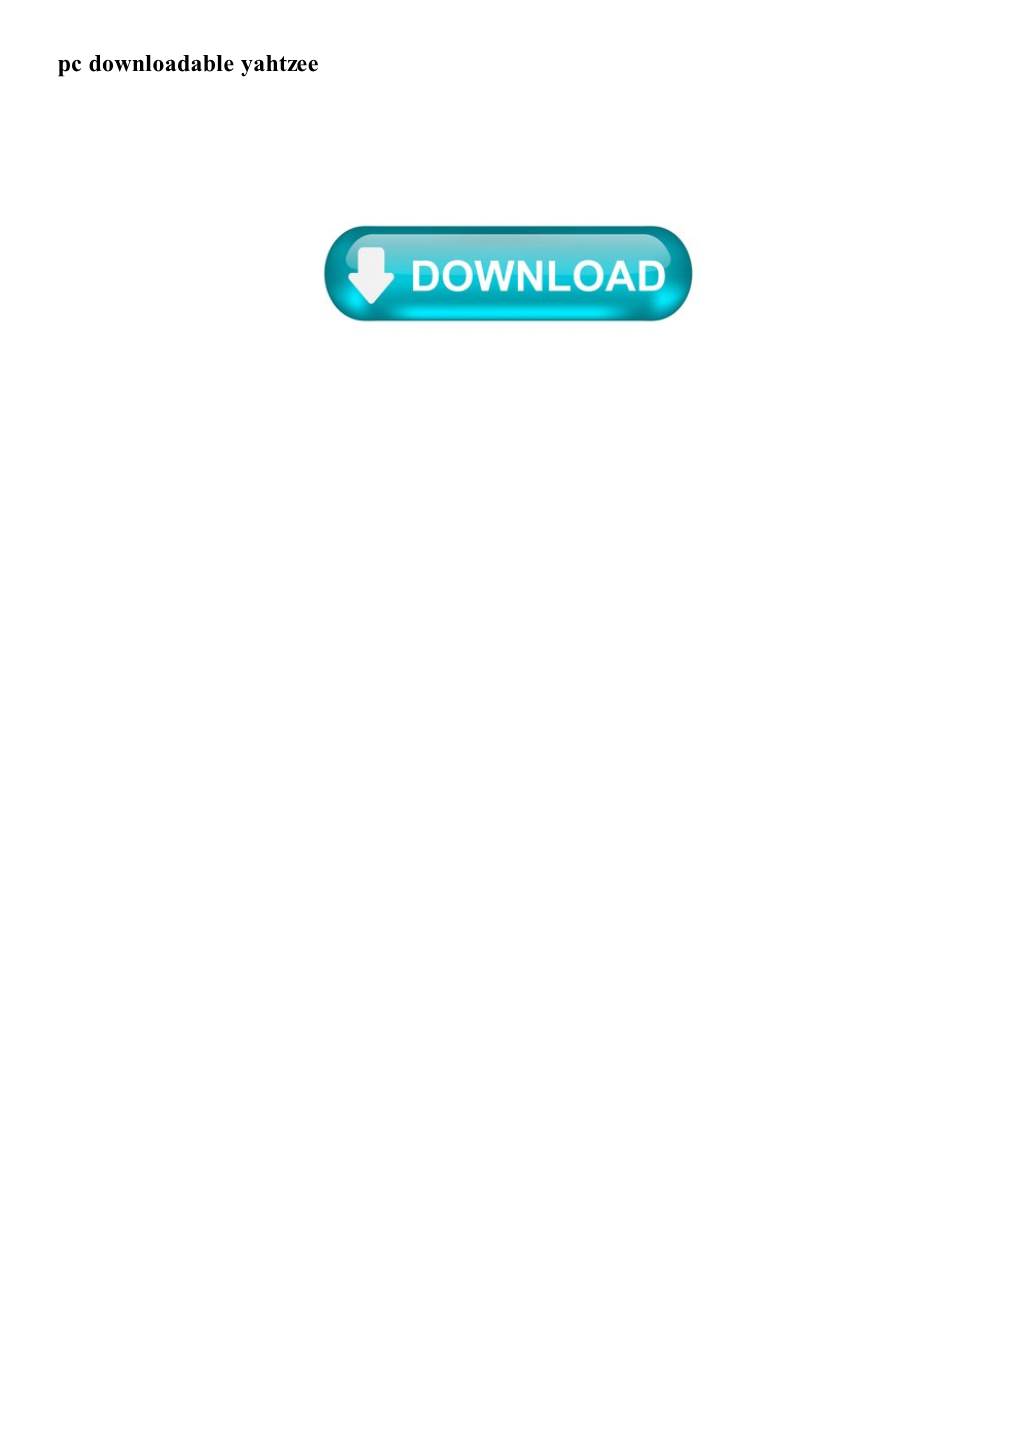 Pc Downloadable Yahtzee Play Yahtzee, Full Review, Download Free Demo, Screenshots